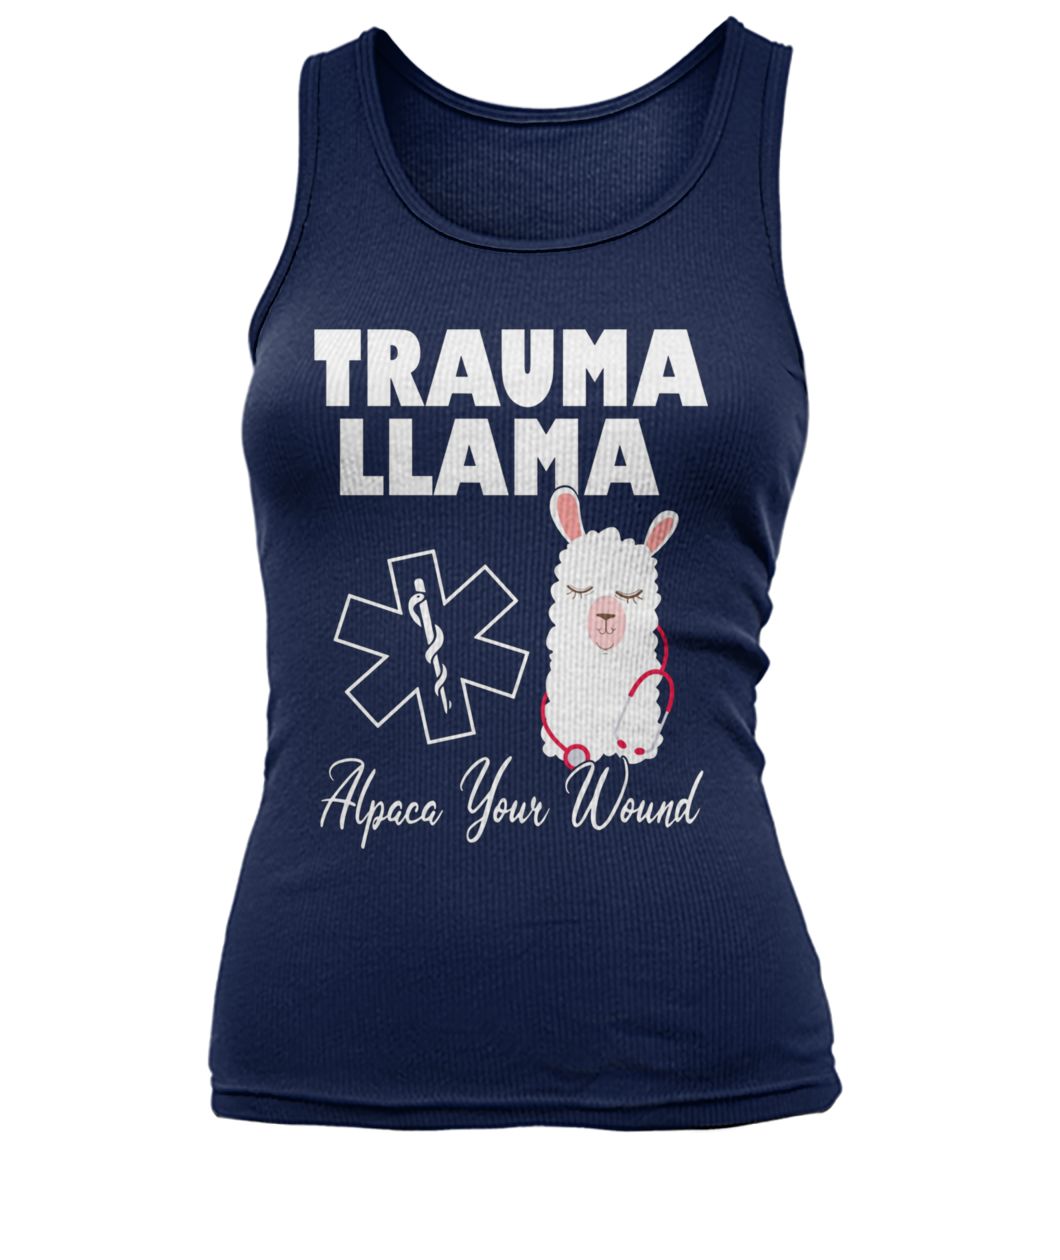 Trauma llama alpaca your wound nurse women's tank top